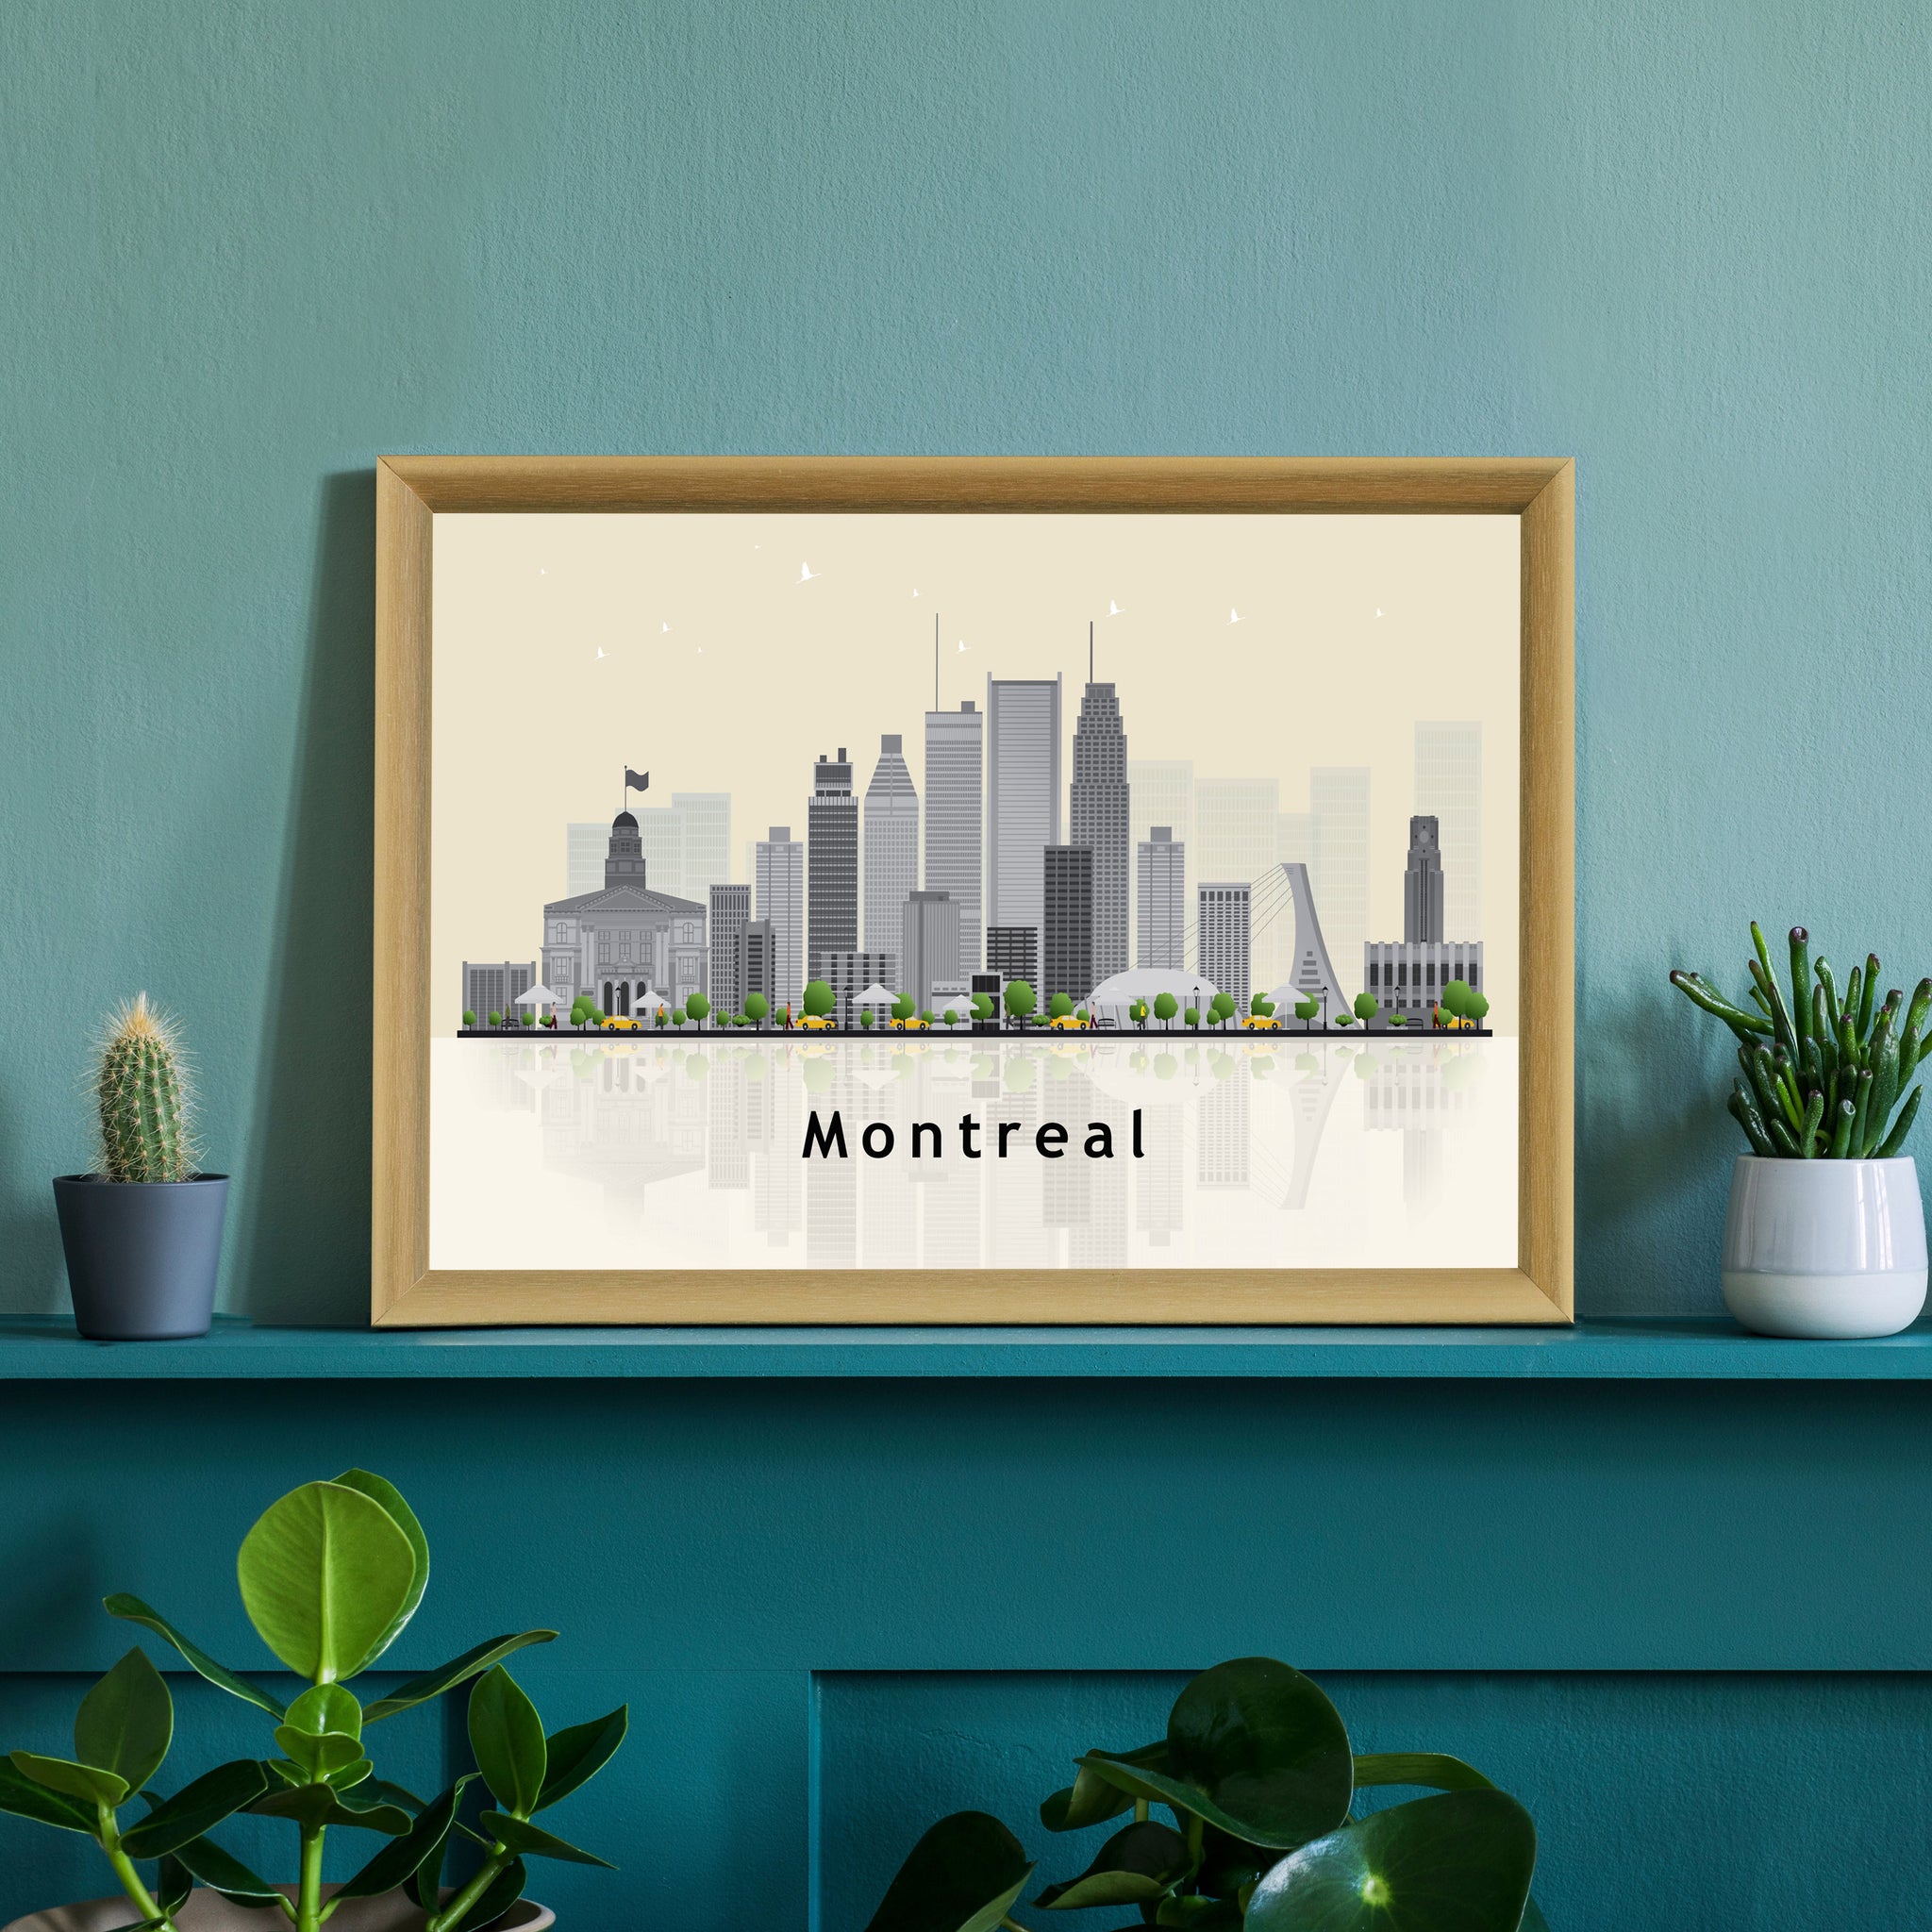 MONTREAL QUEBEC CANADA Illustration skyline poster, Canada modern skyline cityscape poster print, Landmark poster, Home wall art decoration